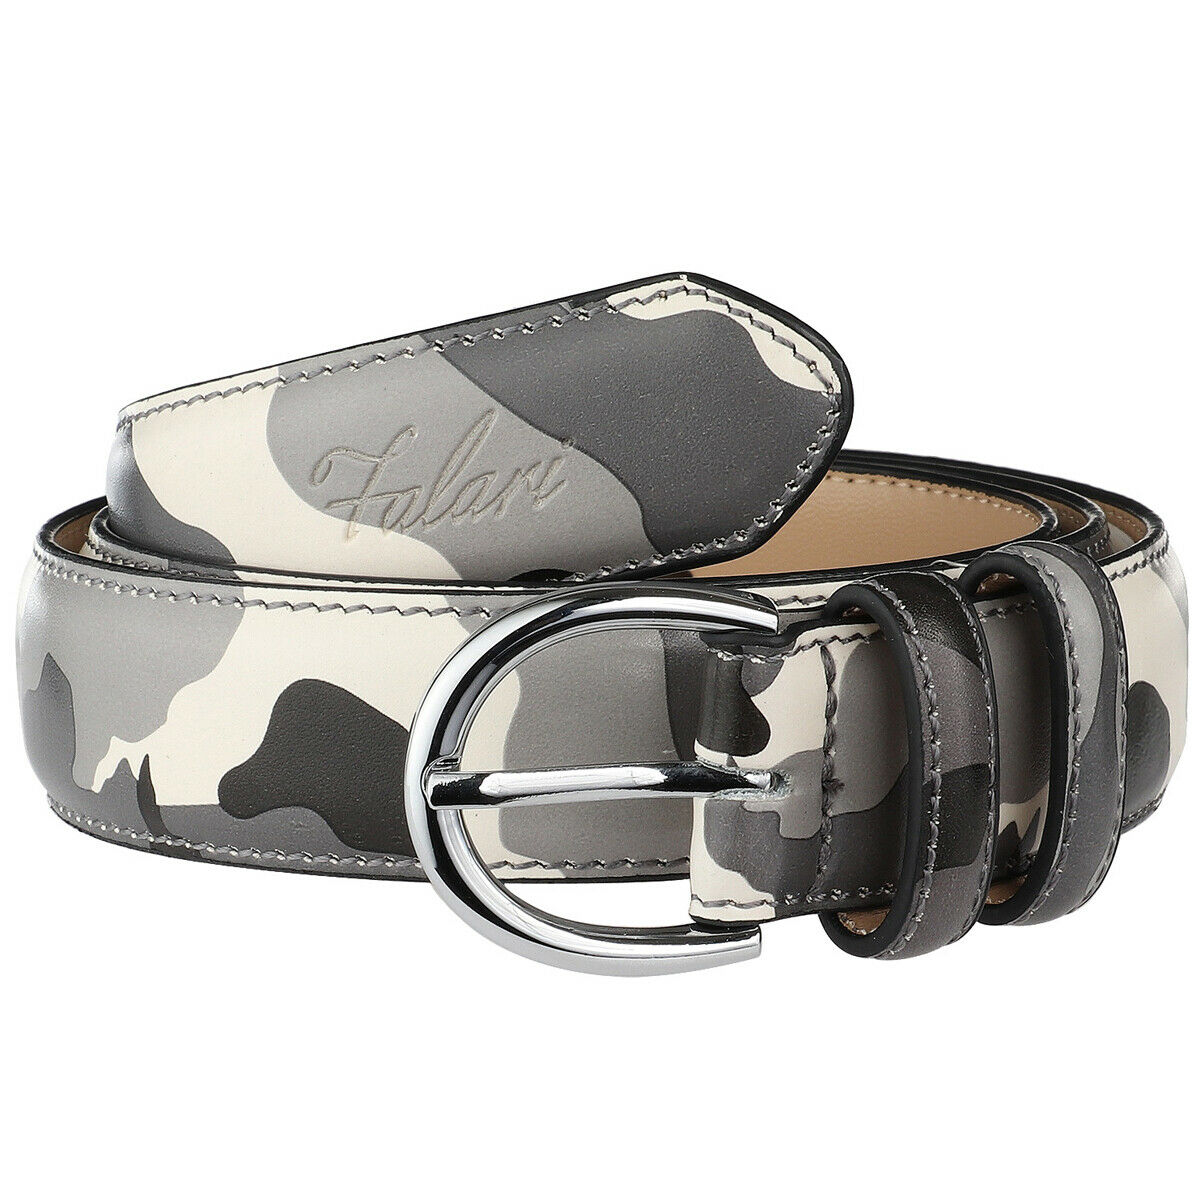 Buy Falari Women Genuine Leather Belt Fashion Dress Belt With Single Prong  Buckle 6028-LightBrown-M at